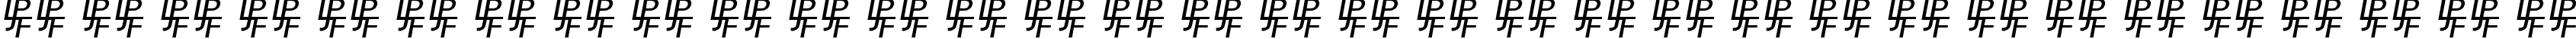 Пример написания русского алфавита шрифтом Caslon Calligraphic Initials